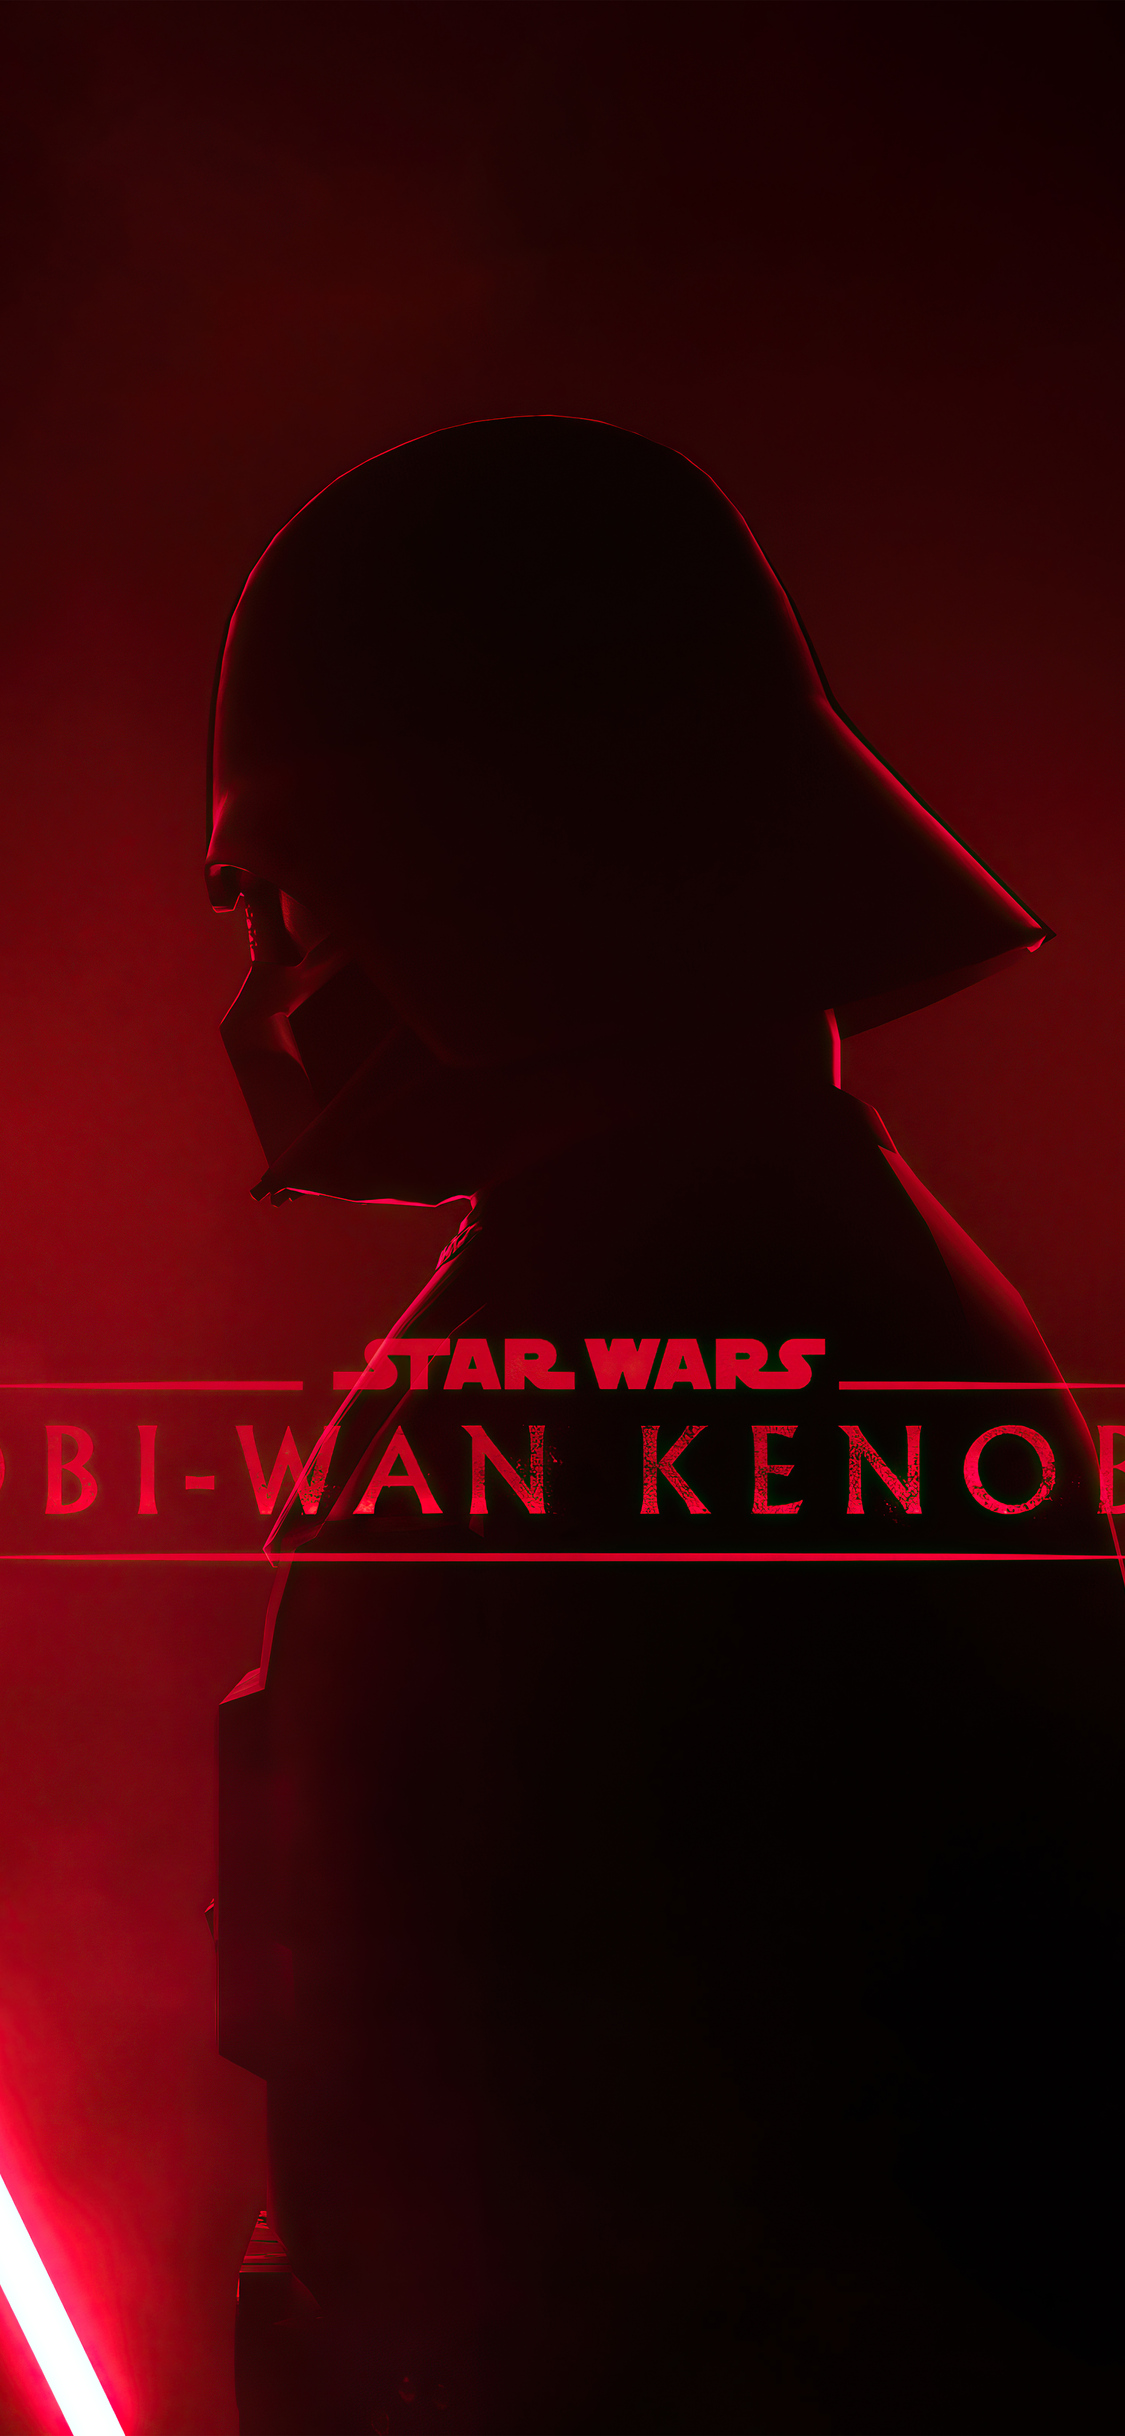 Star Wars Obi Wan Kenobi iPhone XS, iPhone iPhone X HD 4k Wallpaper, Image, Background, Photo and Picture